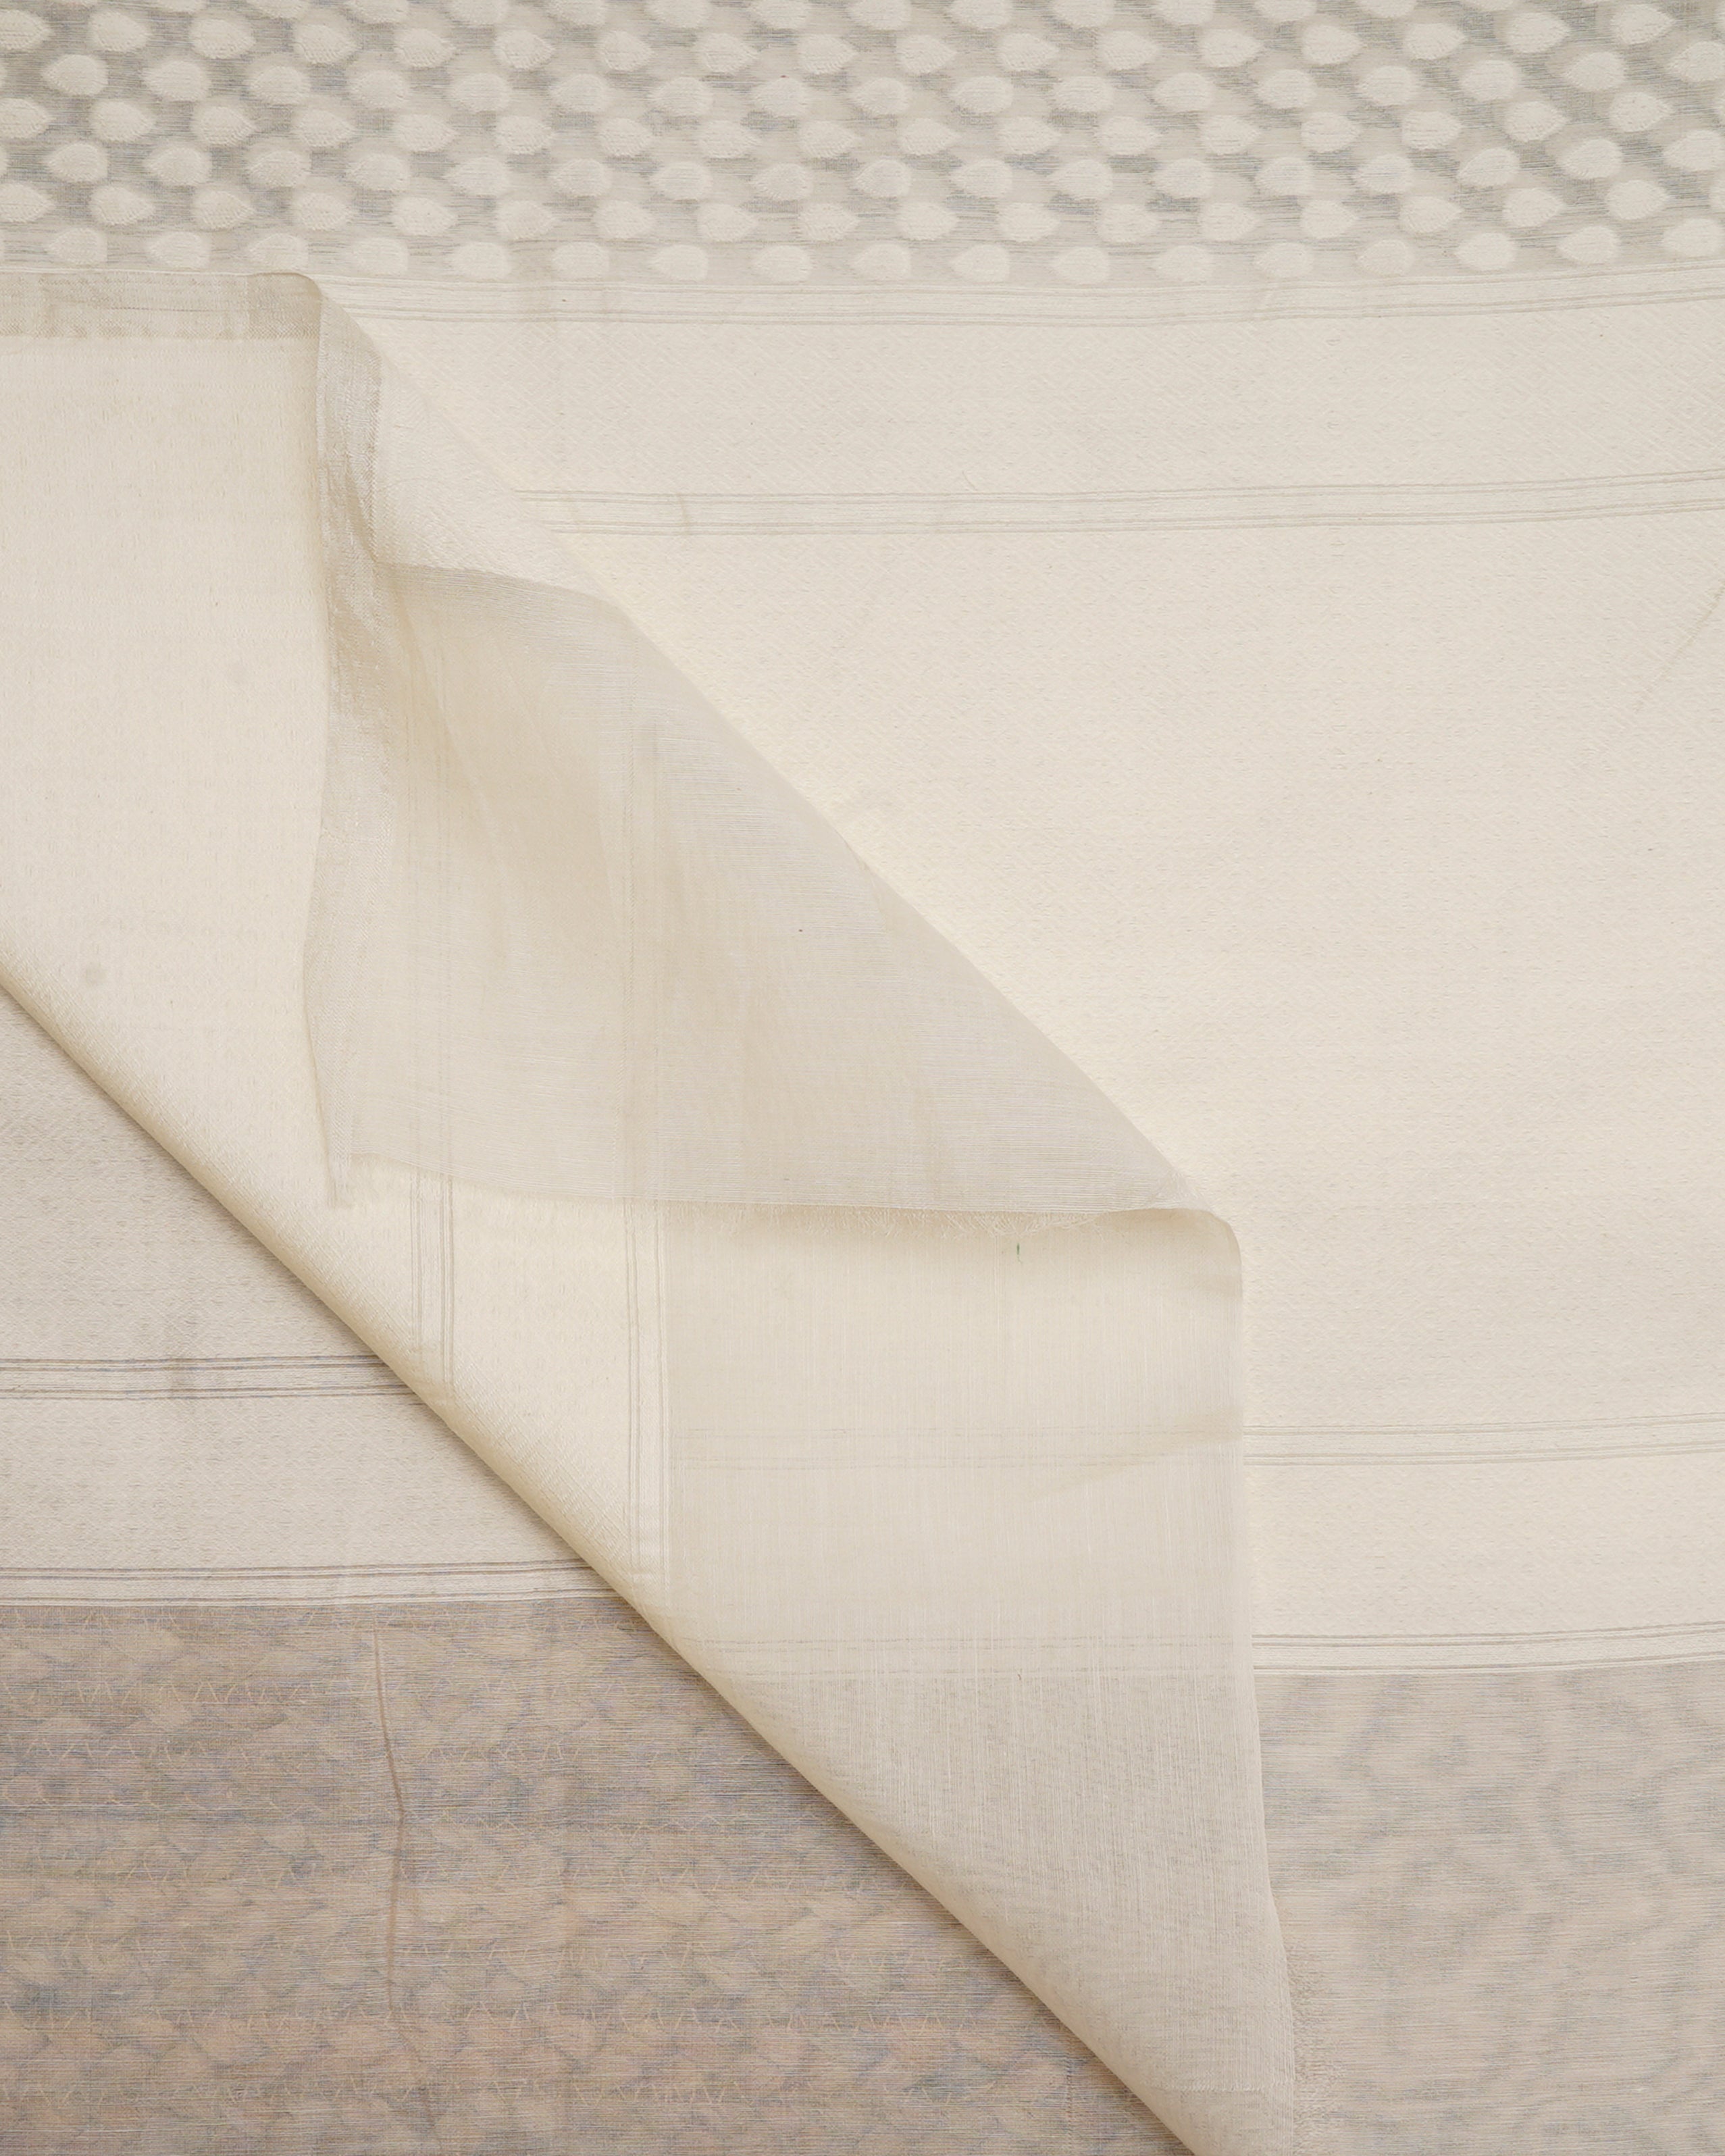 Off-White Color Handwoven Jacquard Cotton Silk Dupatta